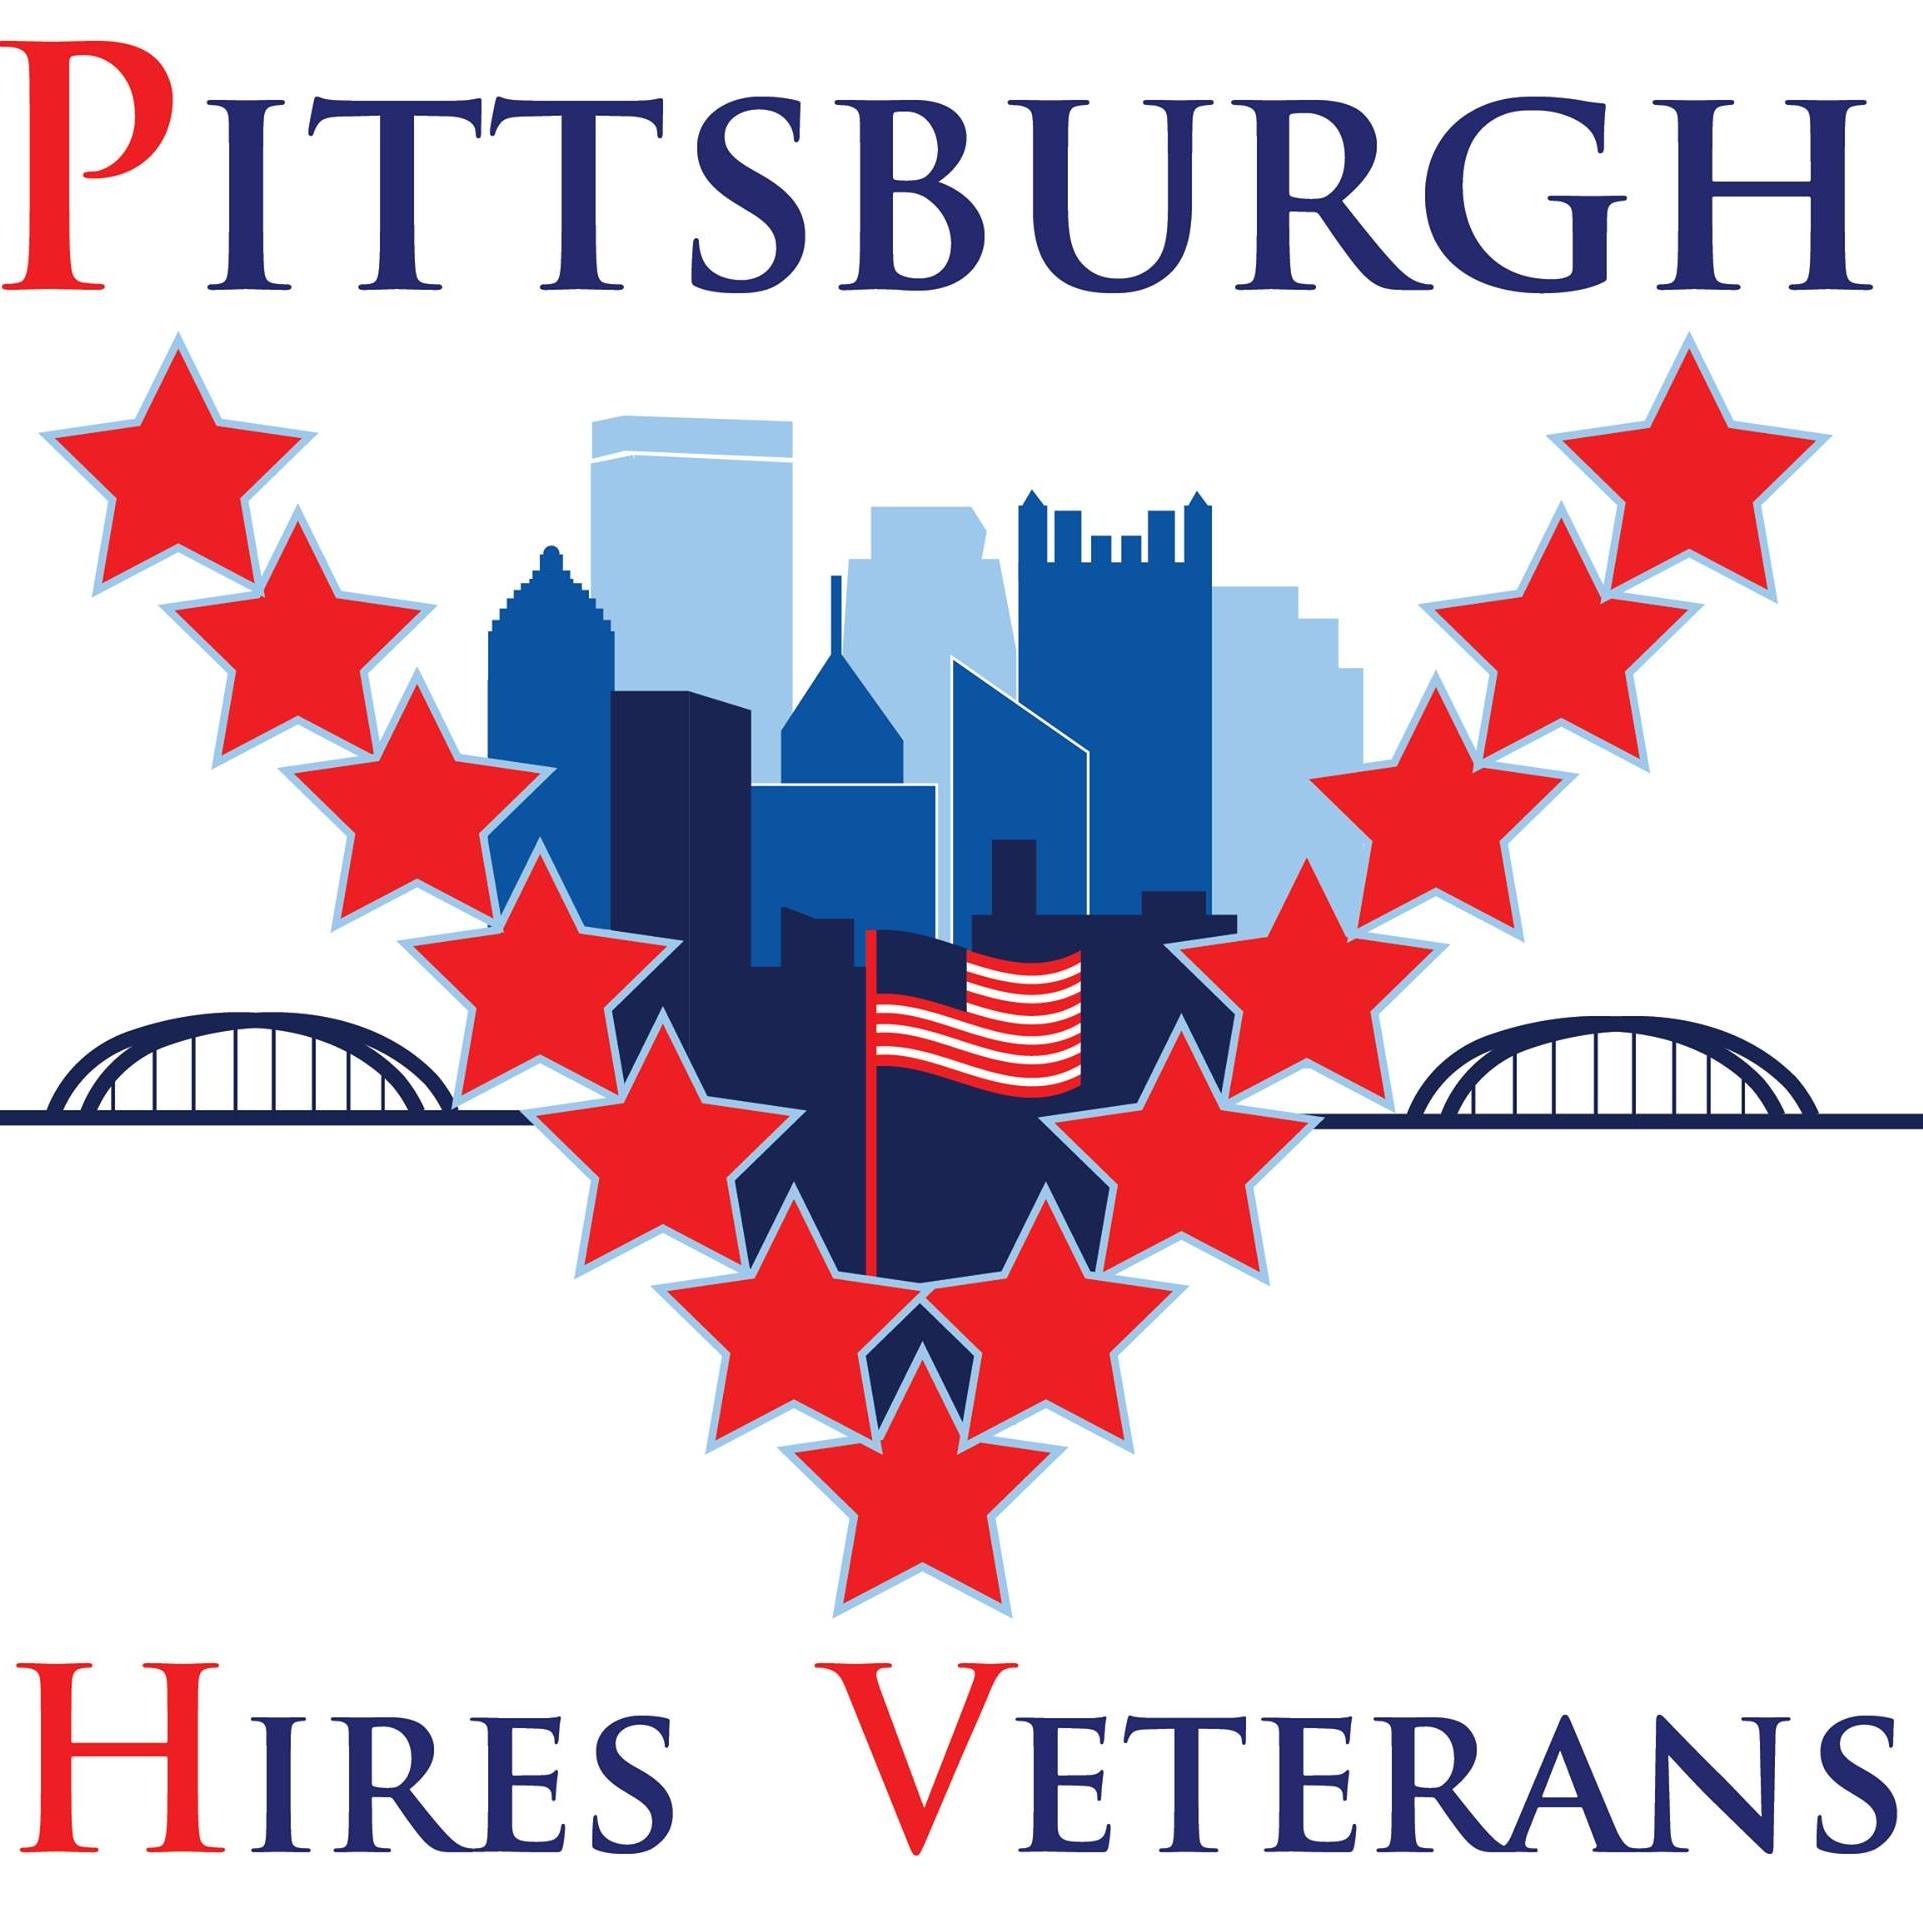 Pittsburgh Hires Veterans